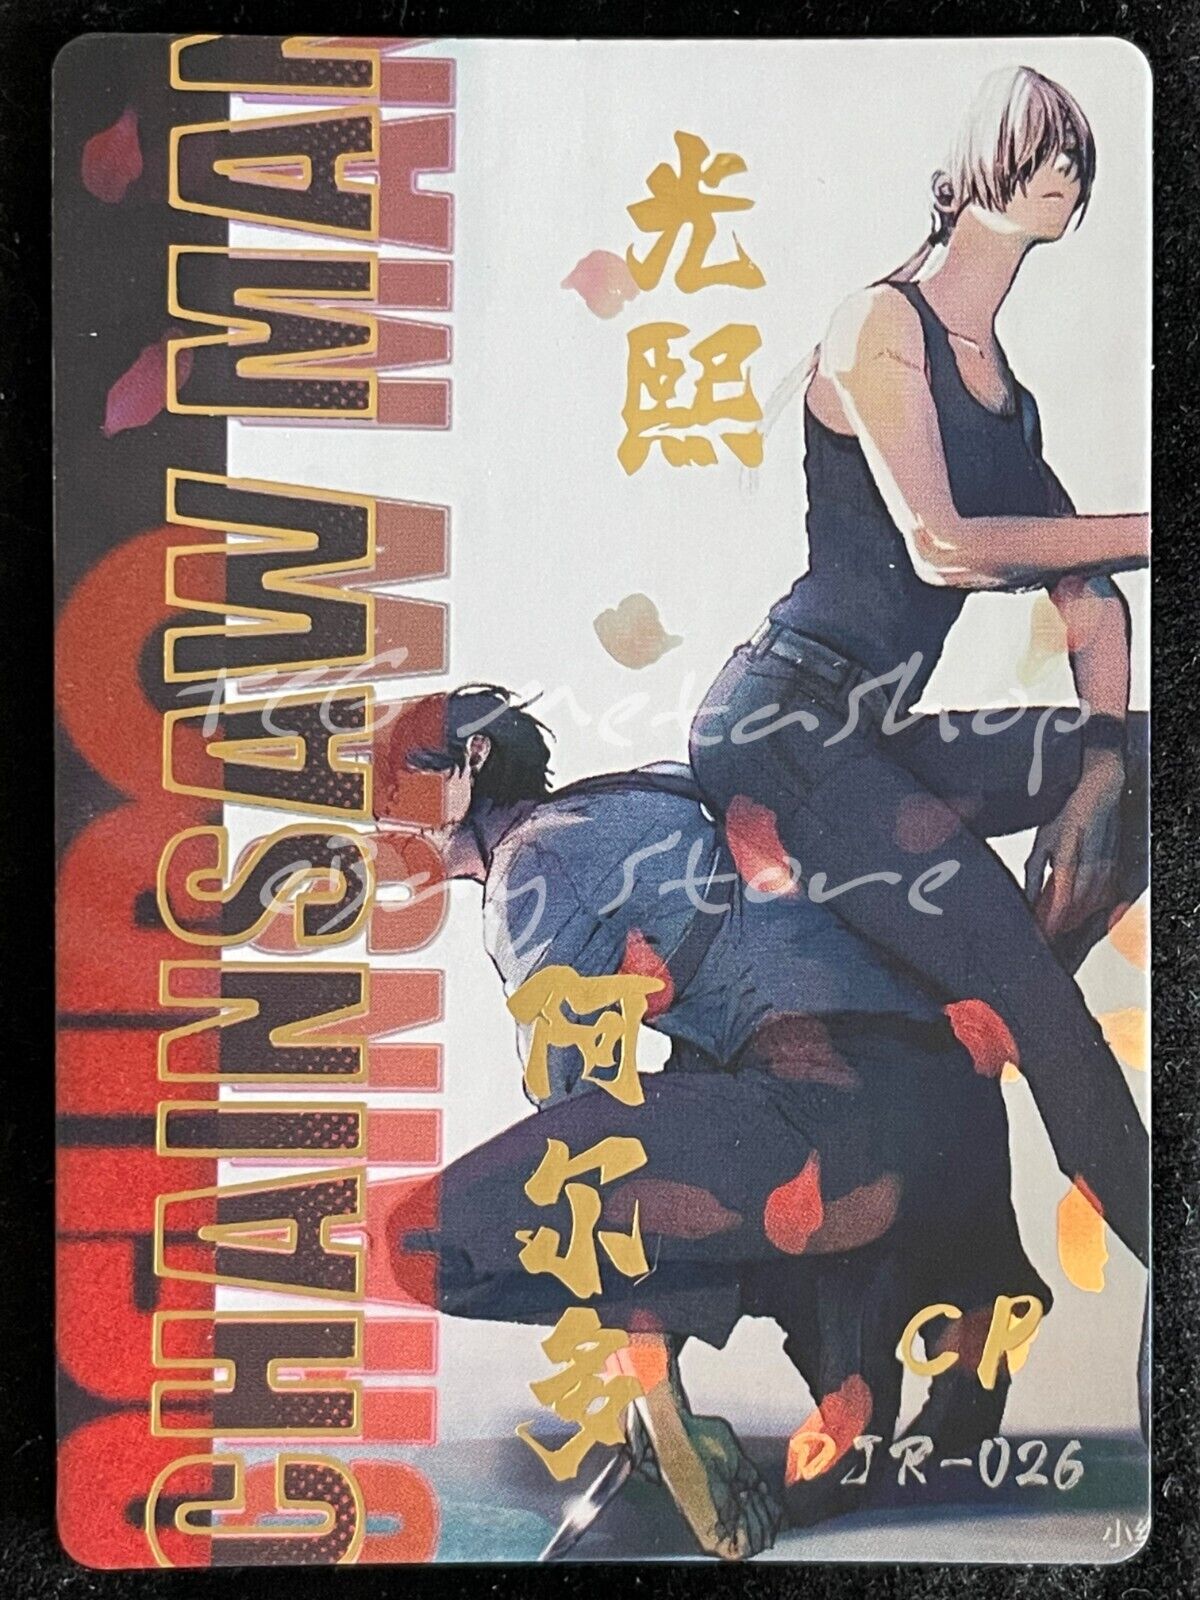 🔥 Chainsaw Man [1 - 56 + Story Board]Big Face Studio Anime Waifu ACG Cards 🔥